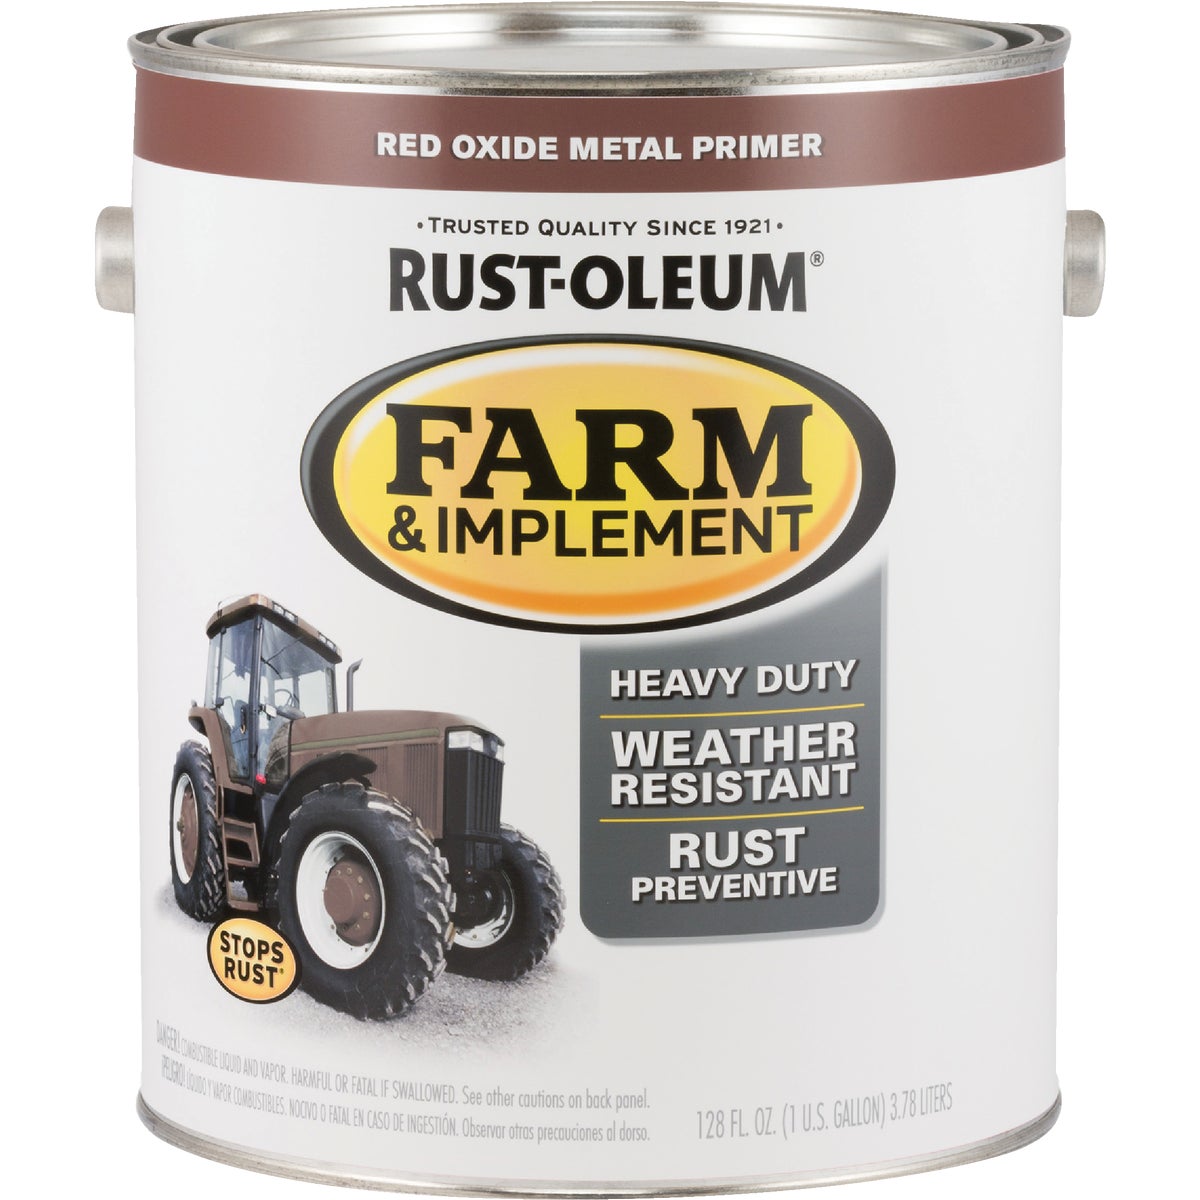 Rust-Oleum 1 Gallon Red Oxide Metal Primer Gloss Farm & Implement Enamel